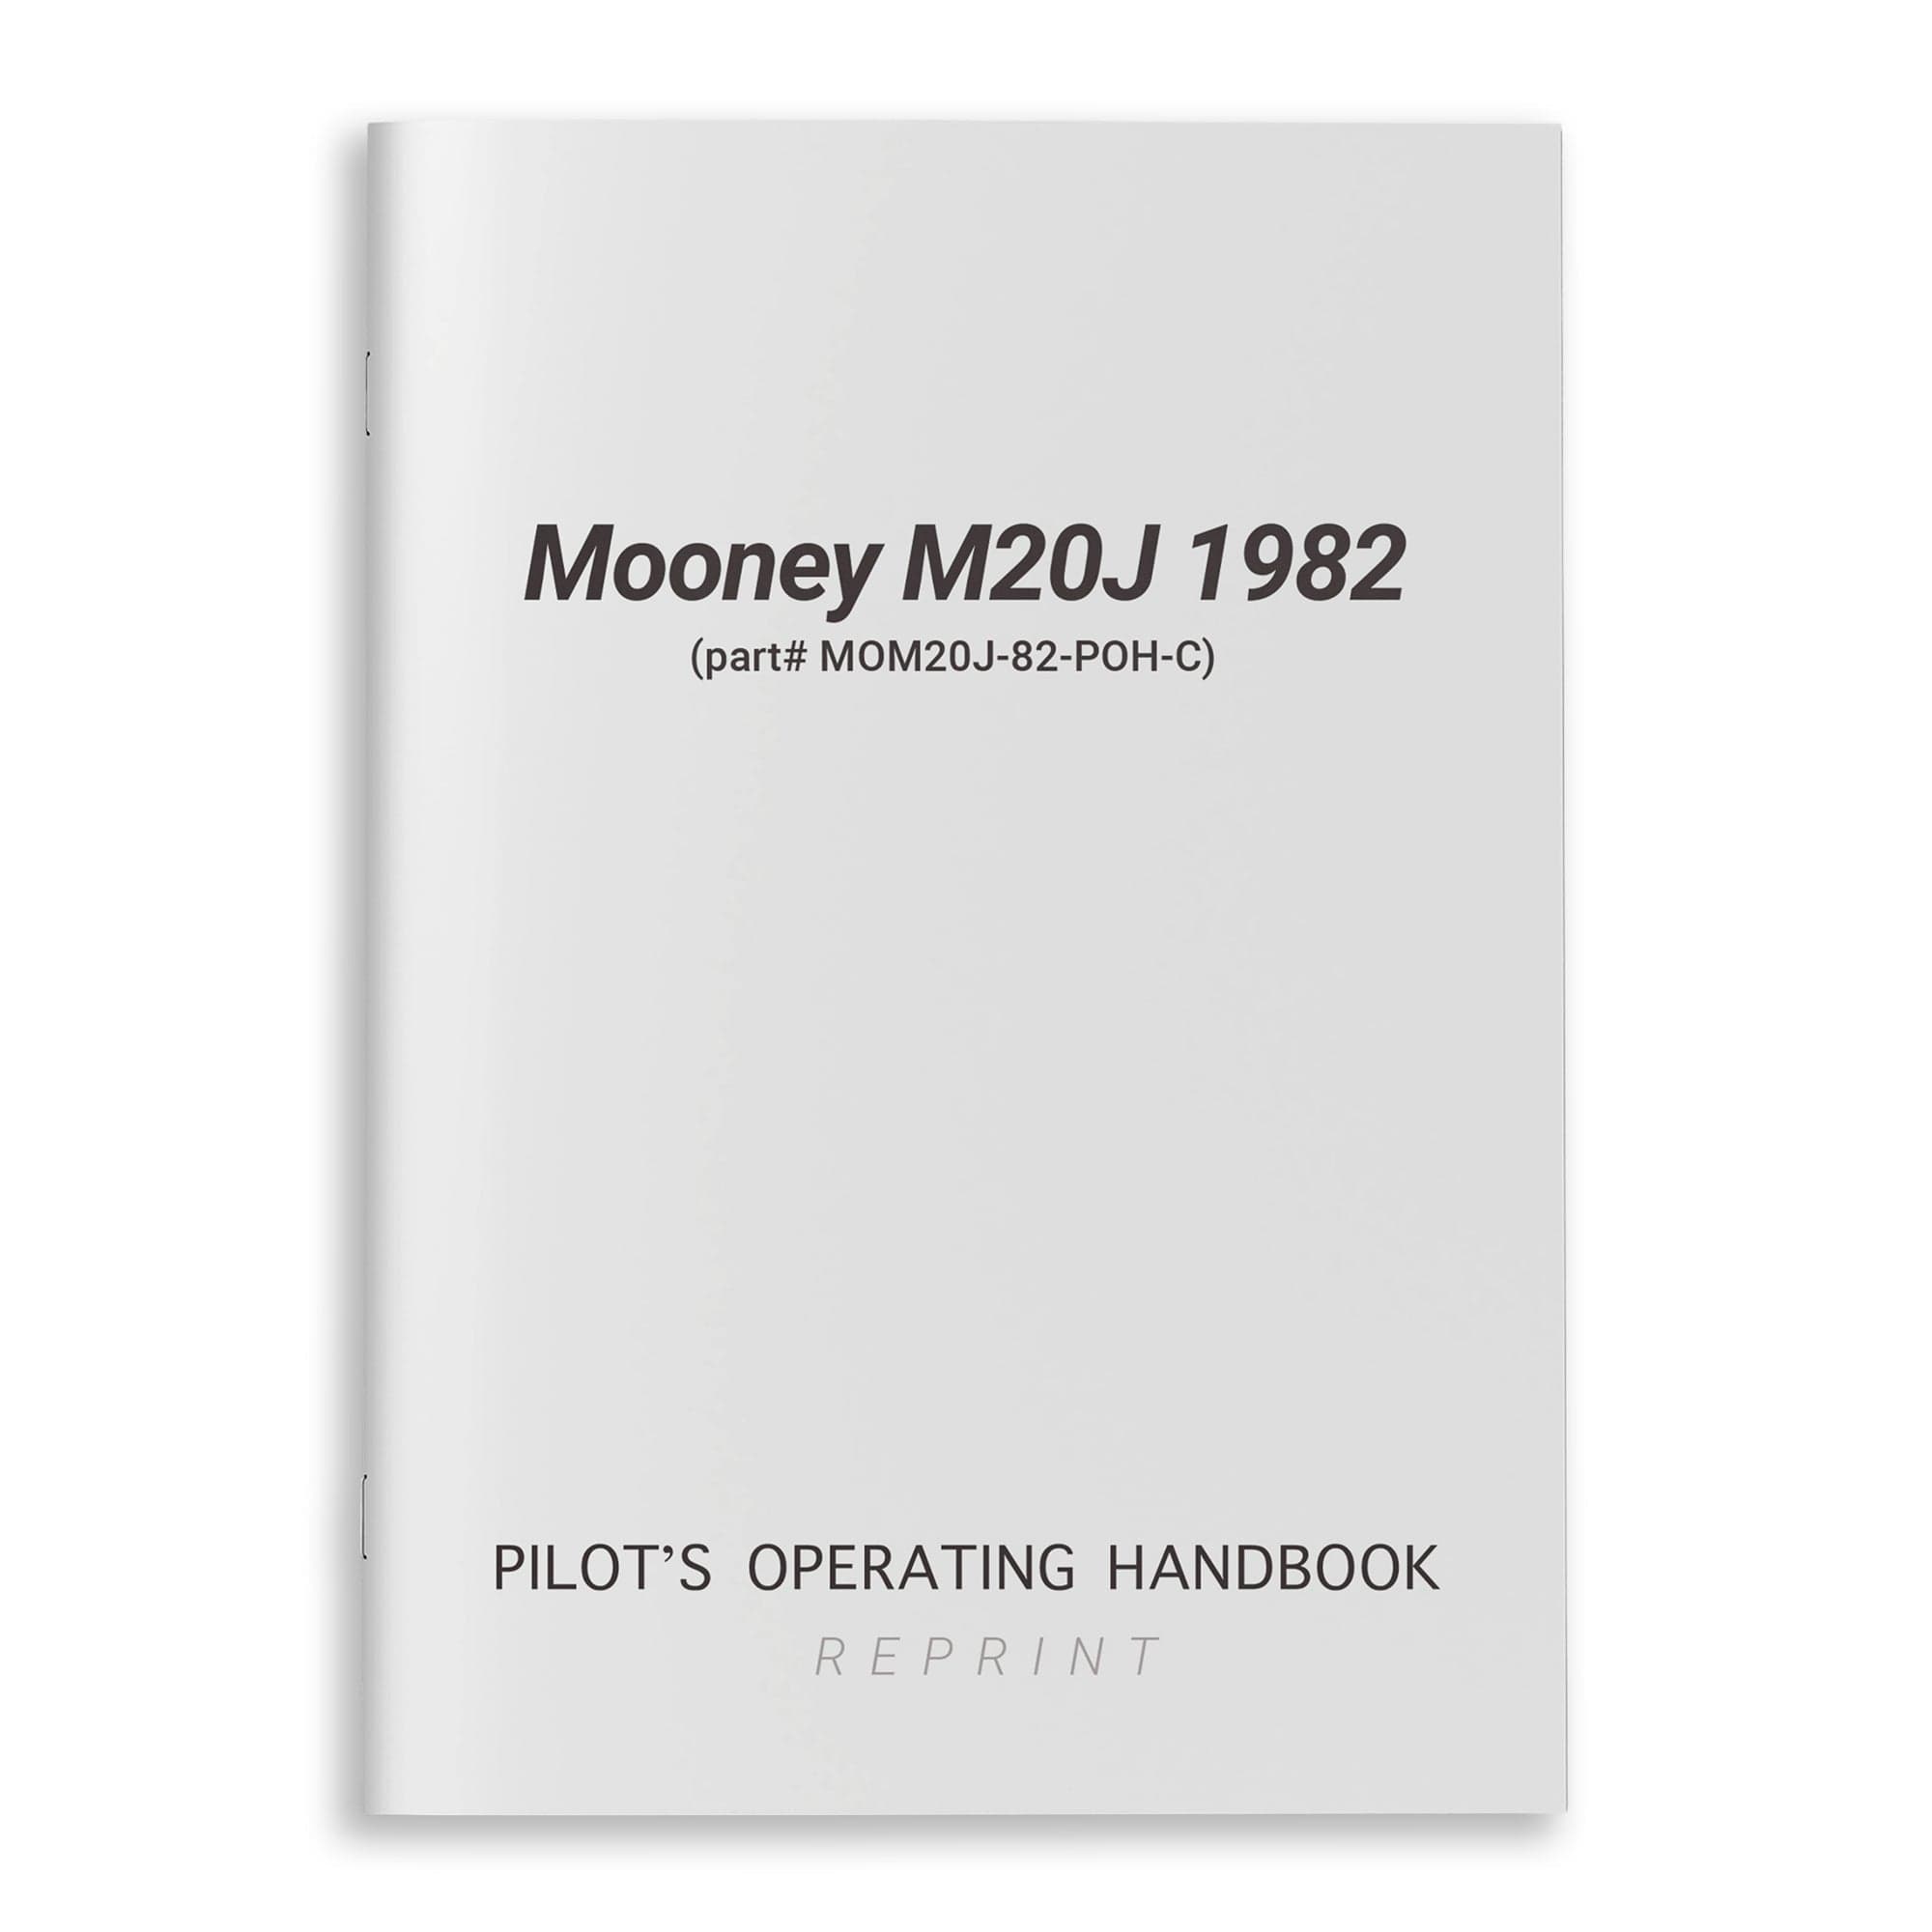 Mooney M20J 1982 Pilot's Operating Handbook (part# MOM20J-82-POH-C)